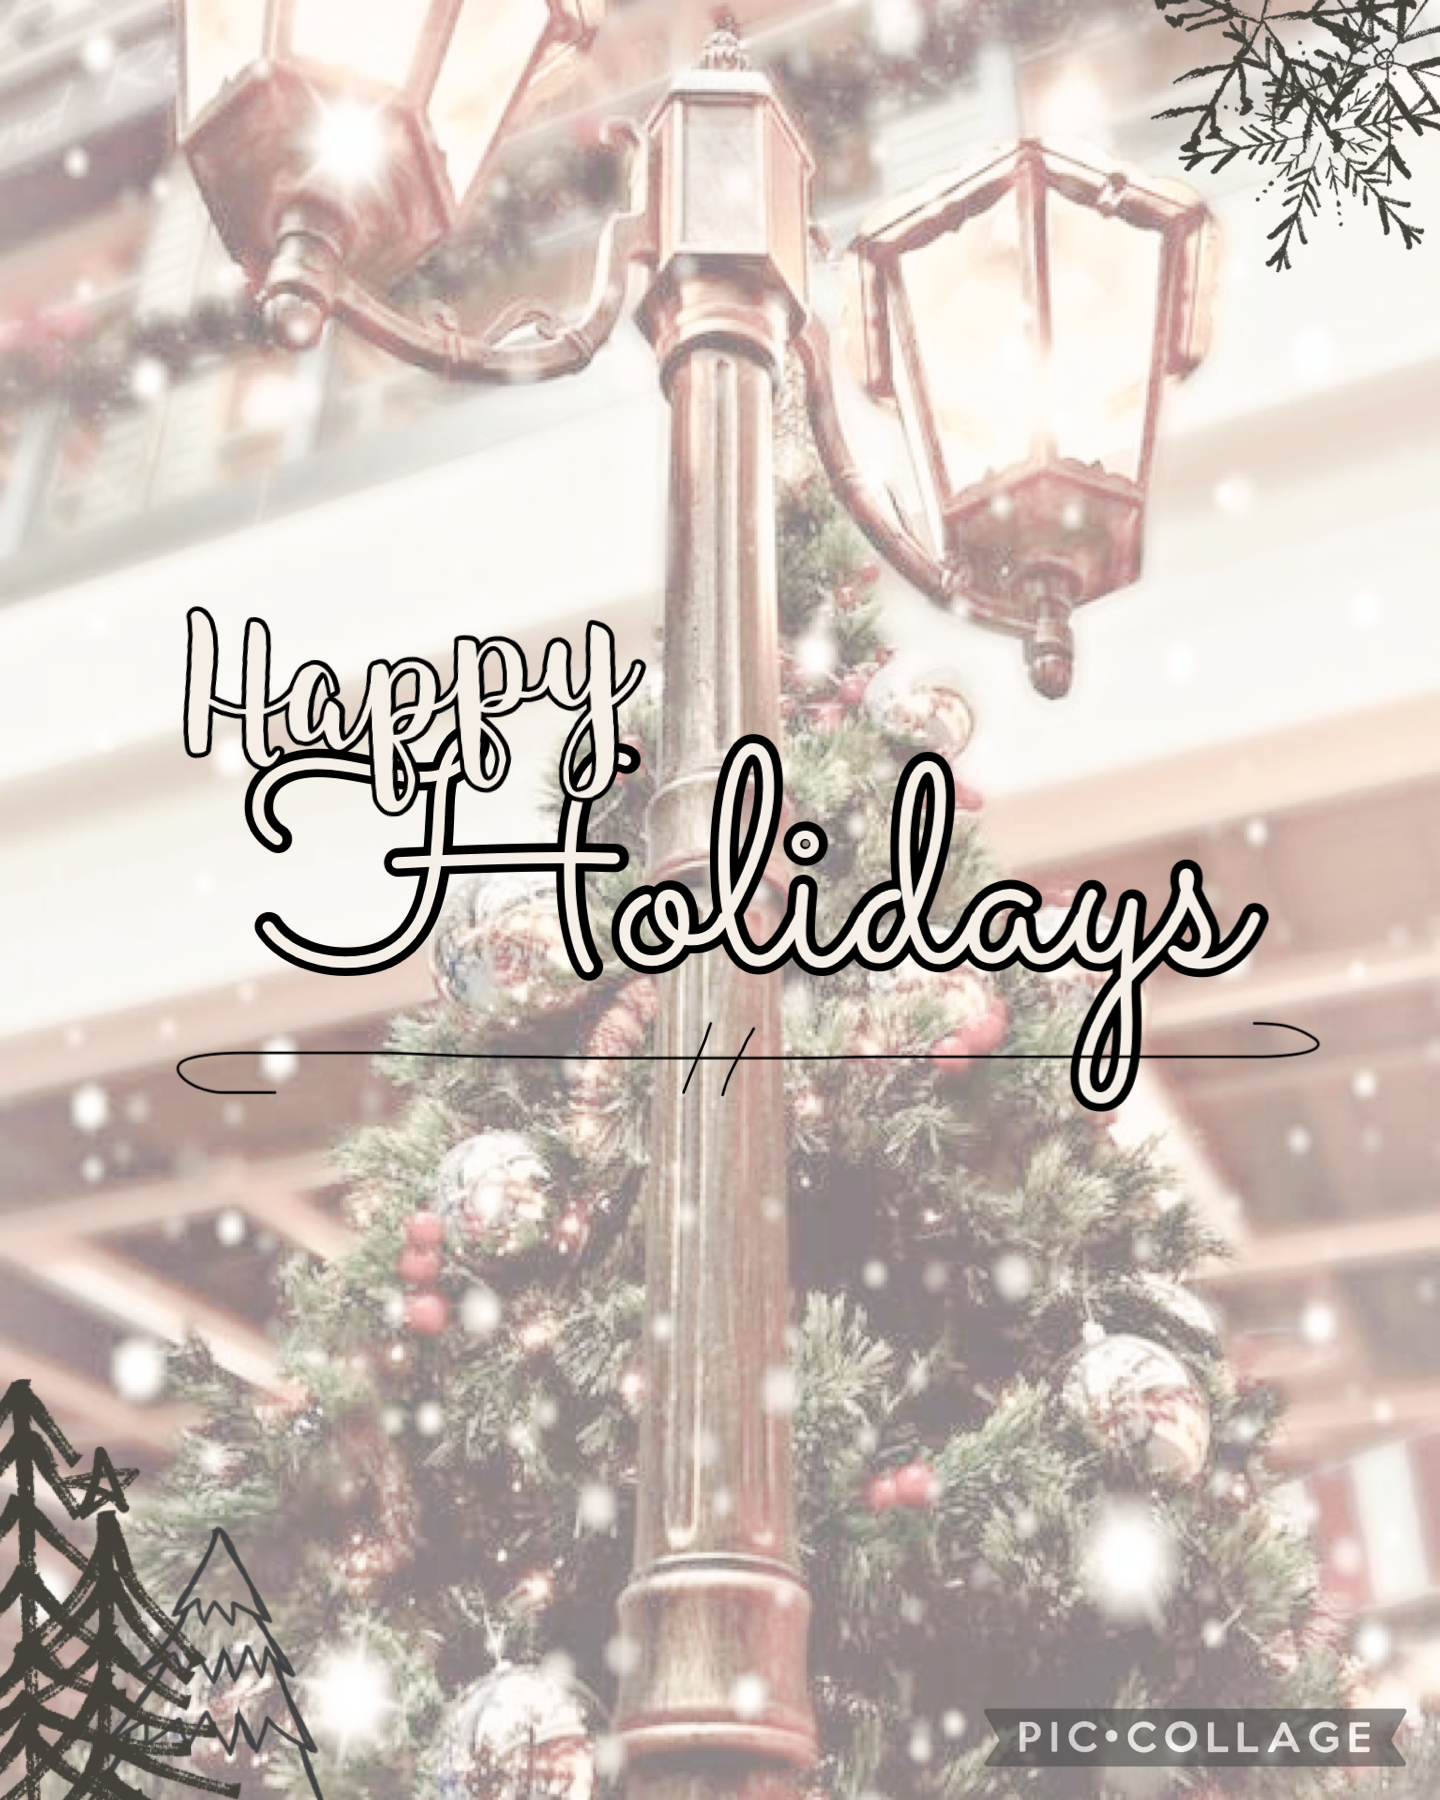 ✨🎄 Happy Holidays Guys! ~~